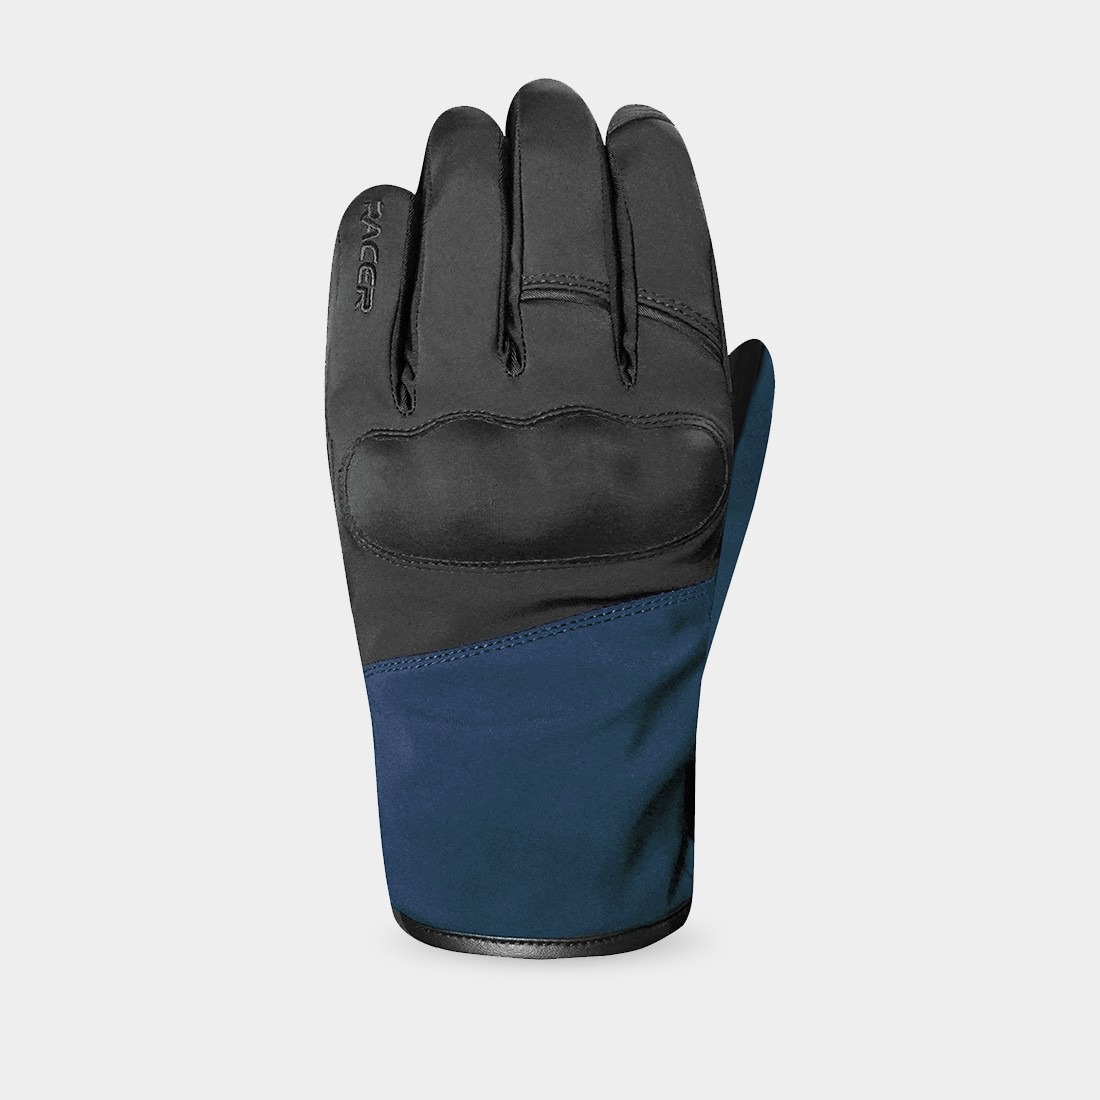 gloves WILDRY, RACER (black/navy)